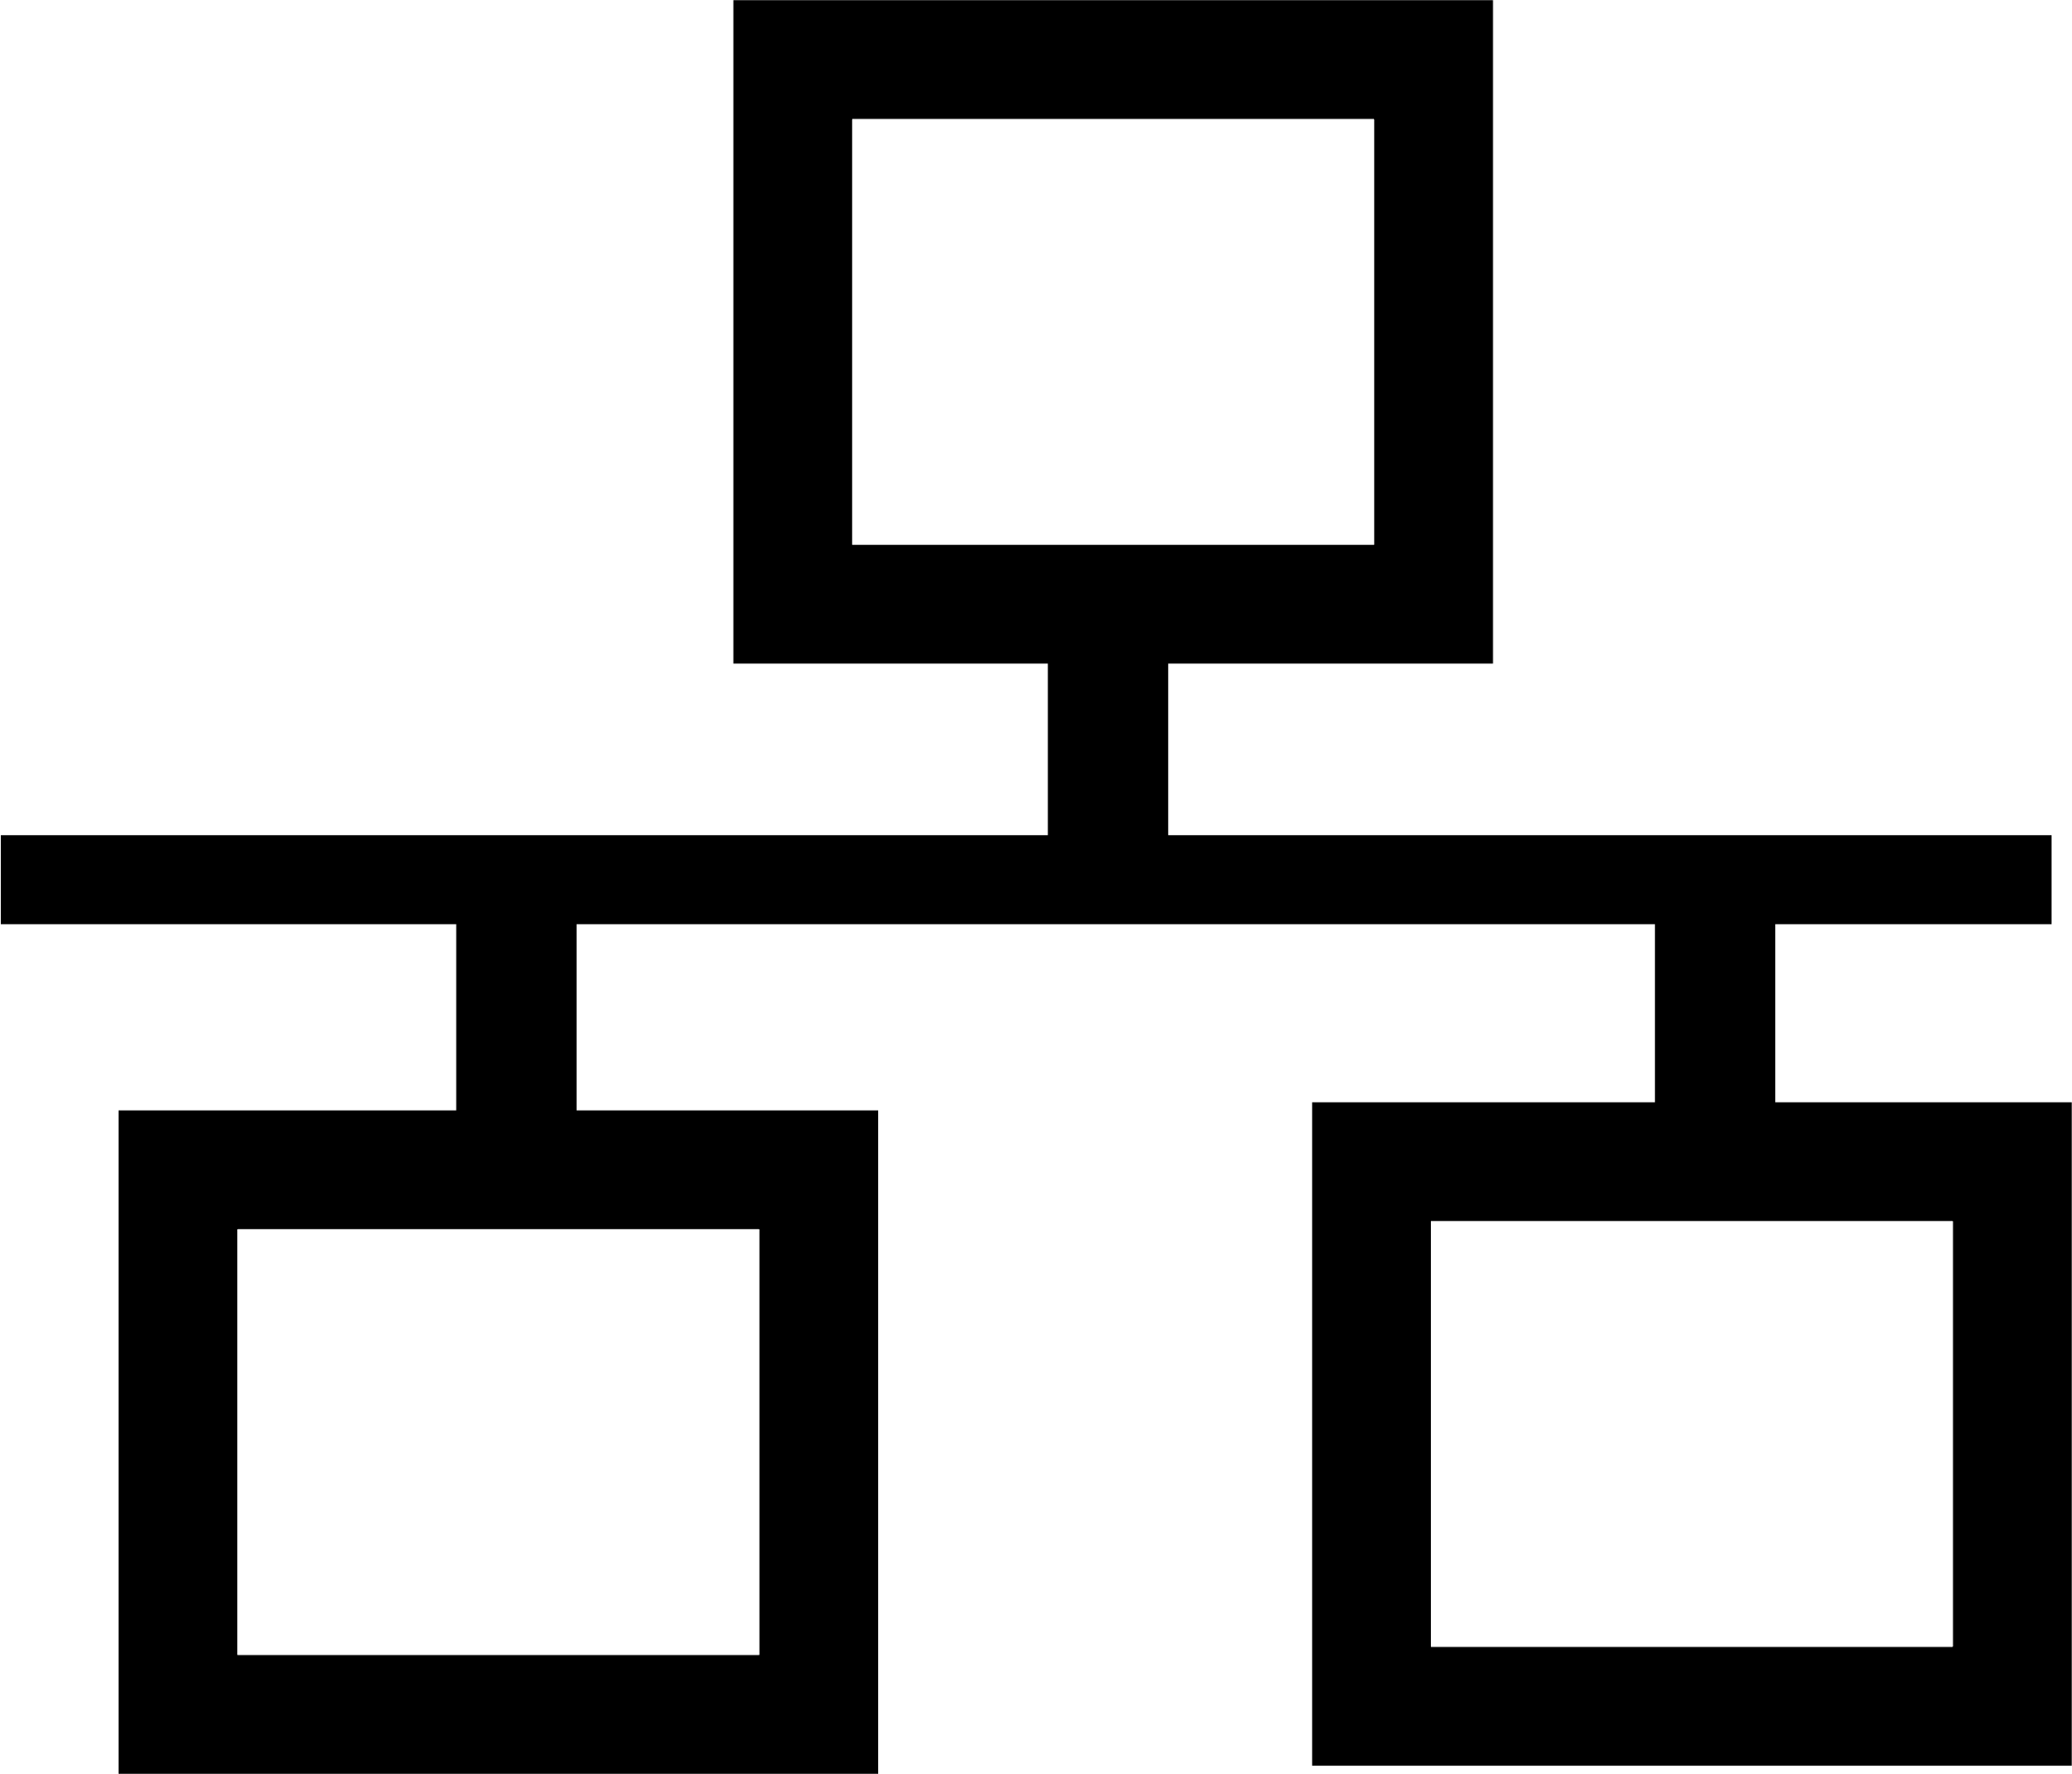 5535 - Ethernet Symbol (2324x1990)